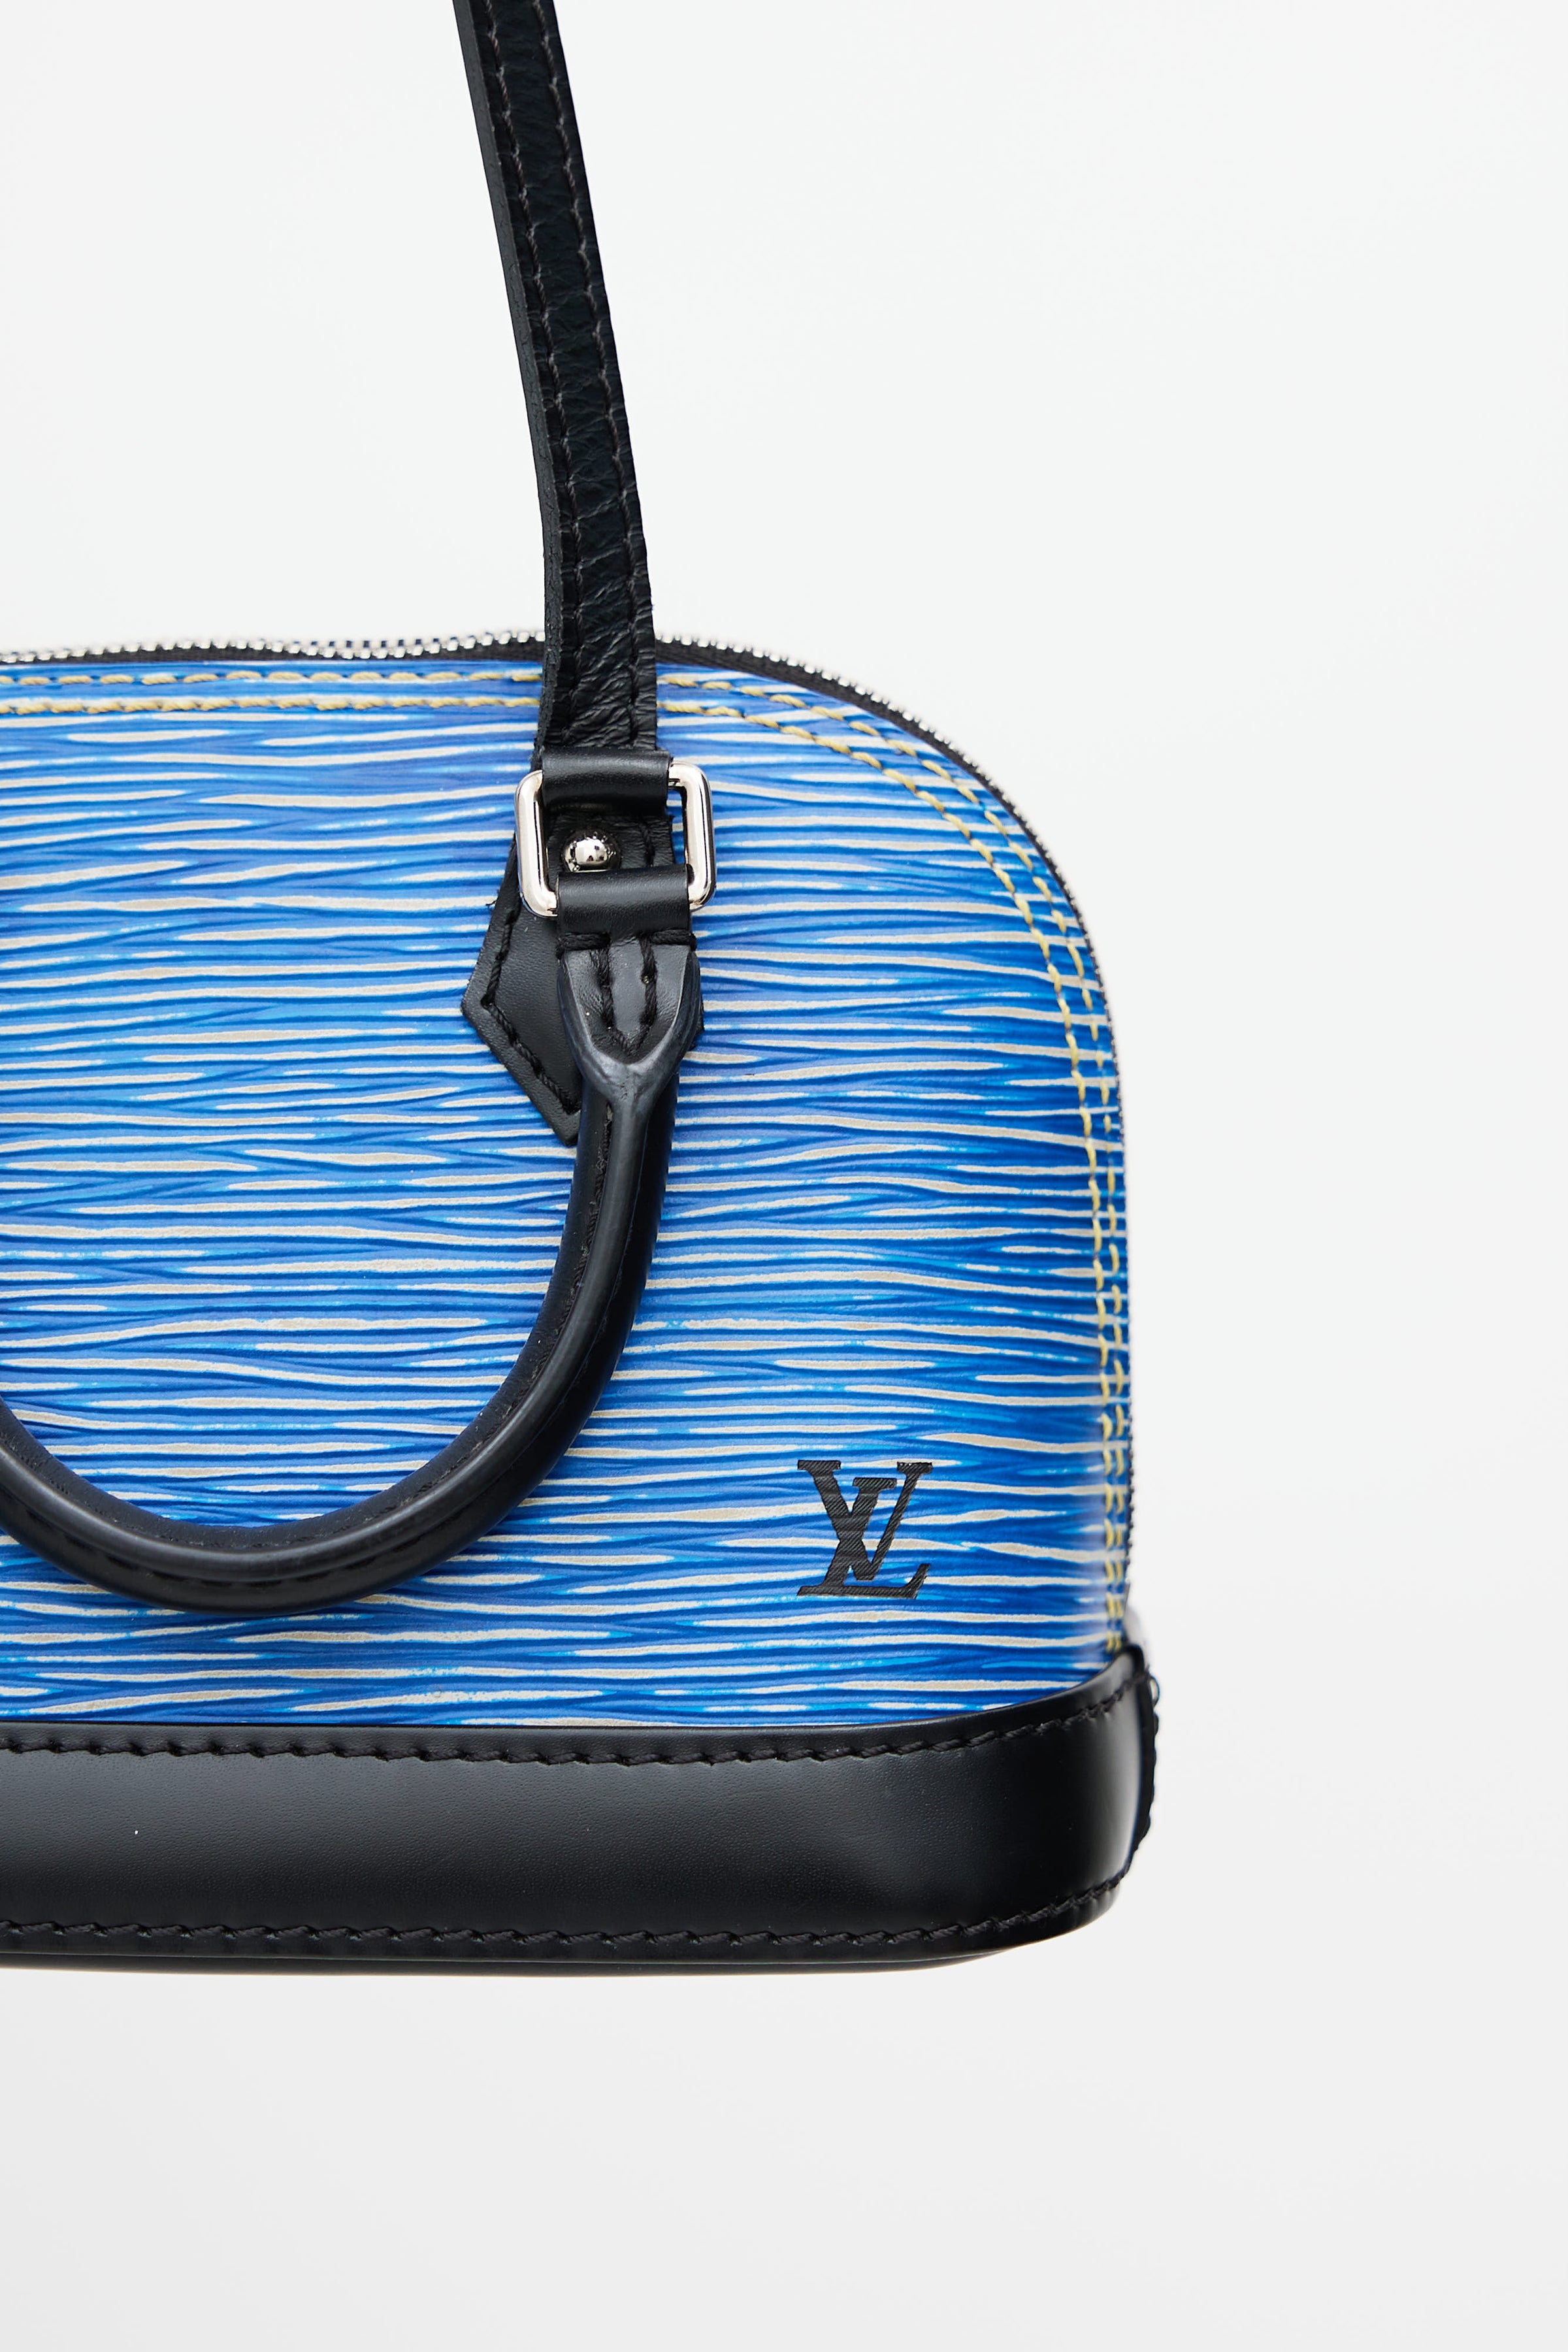 2016 #Louis #Vuitton #Handbags Alma Only $220 For Womens Fashion